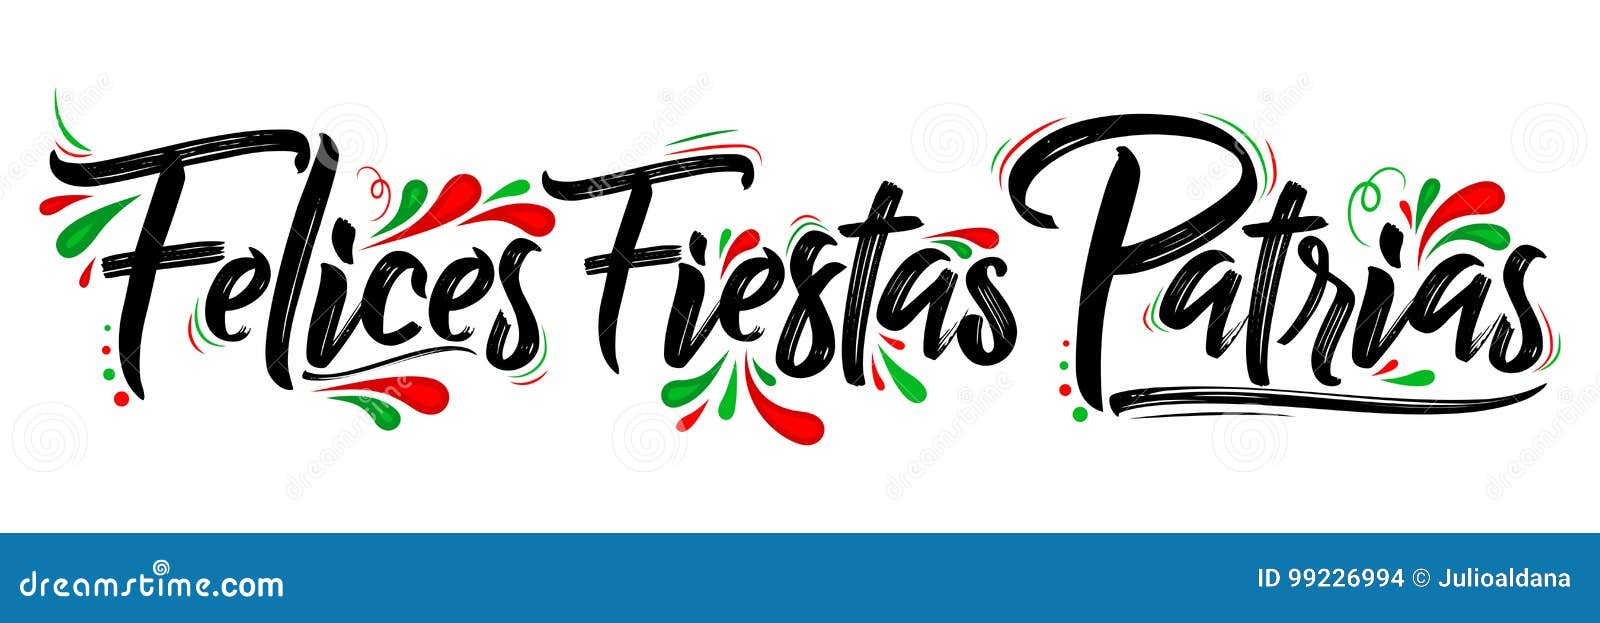 Fiestas Patrias Mexico Stock Illustrations – 49 Fiestas Patrias Mexico  Stock Illustrations, Vectors & Clipart - Dreamstime